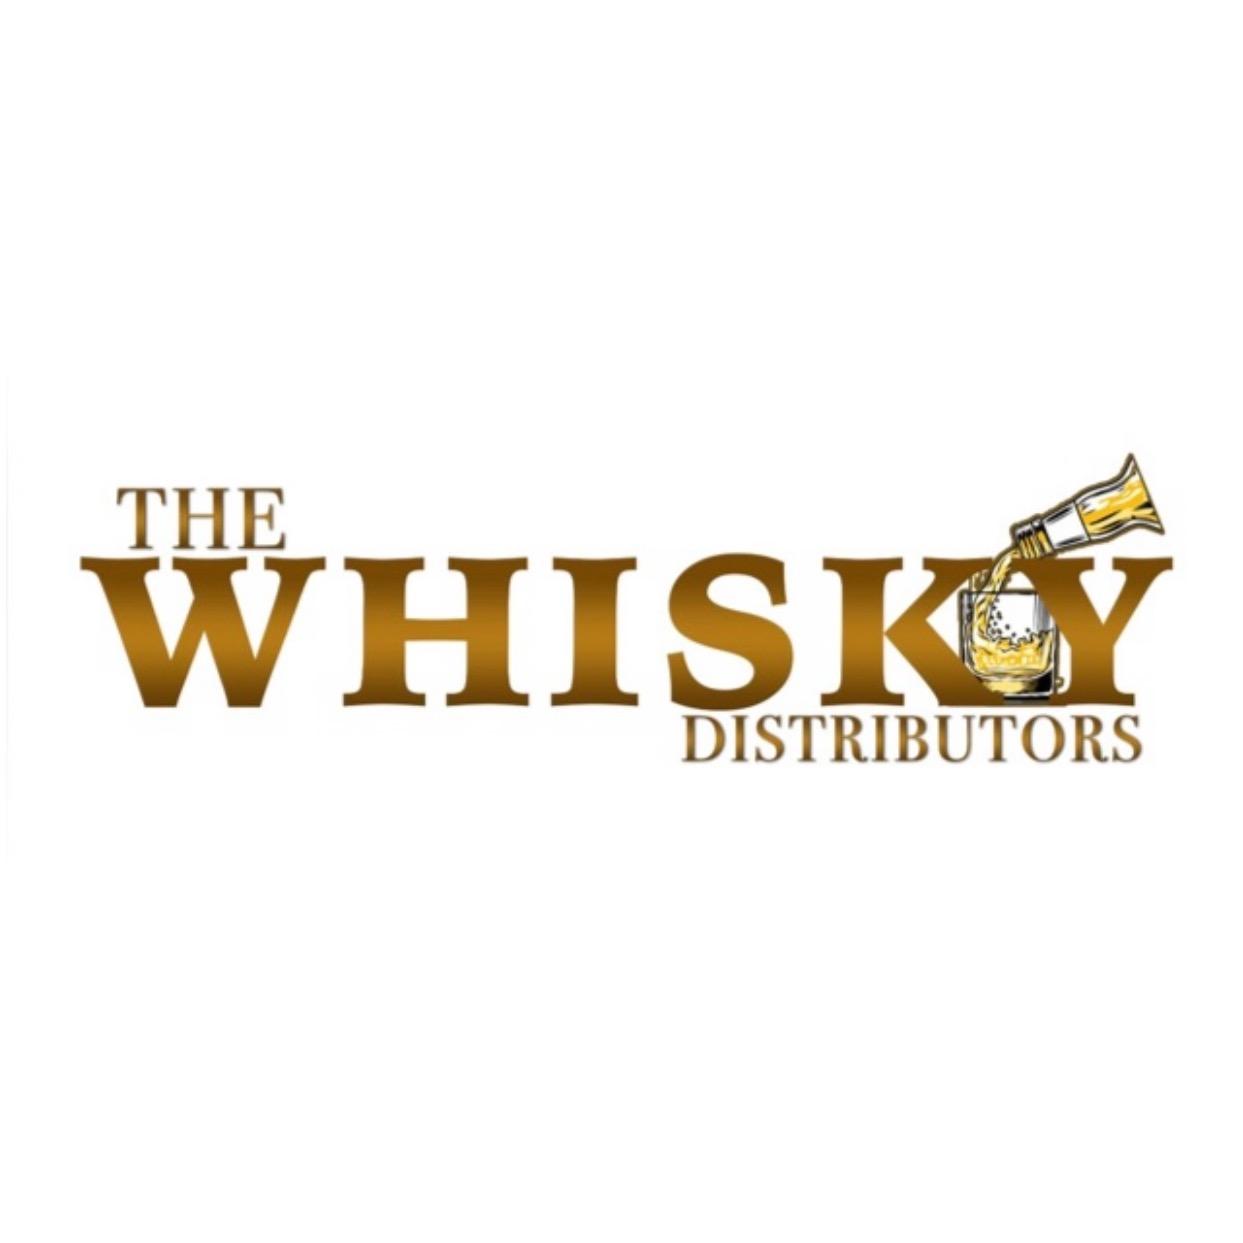 Thé whisky distributors llc - Denton, TX 76210 - (512)920-2547 | ShowMeLocal.com